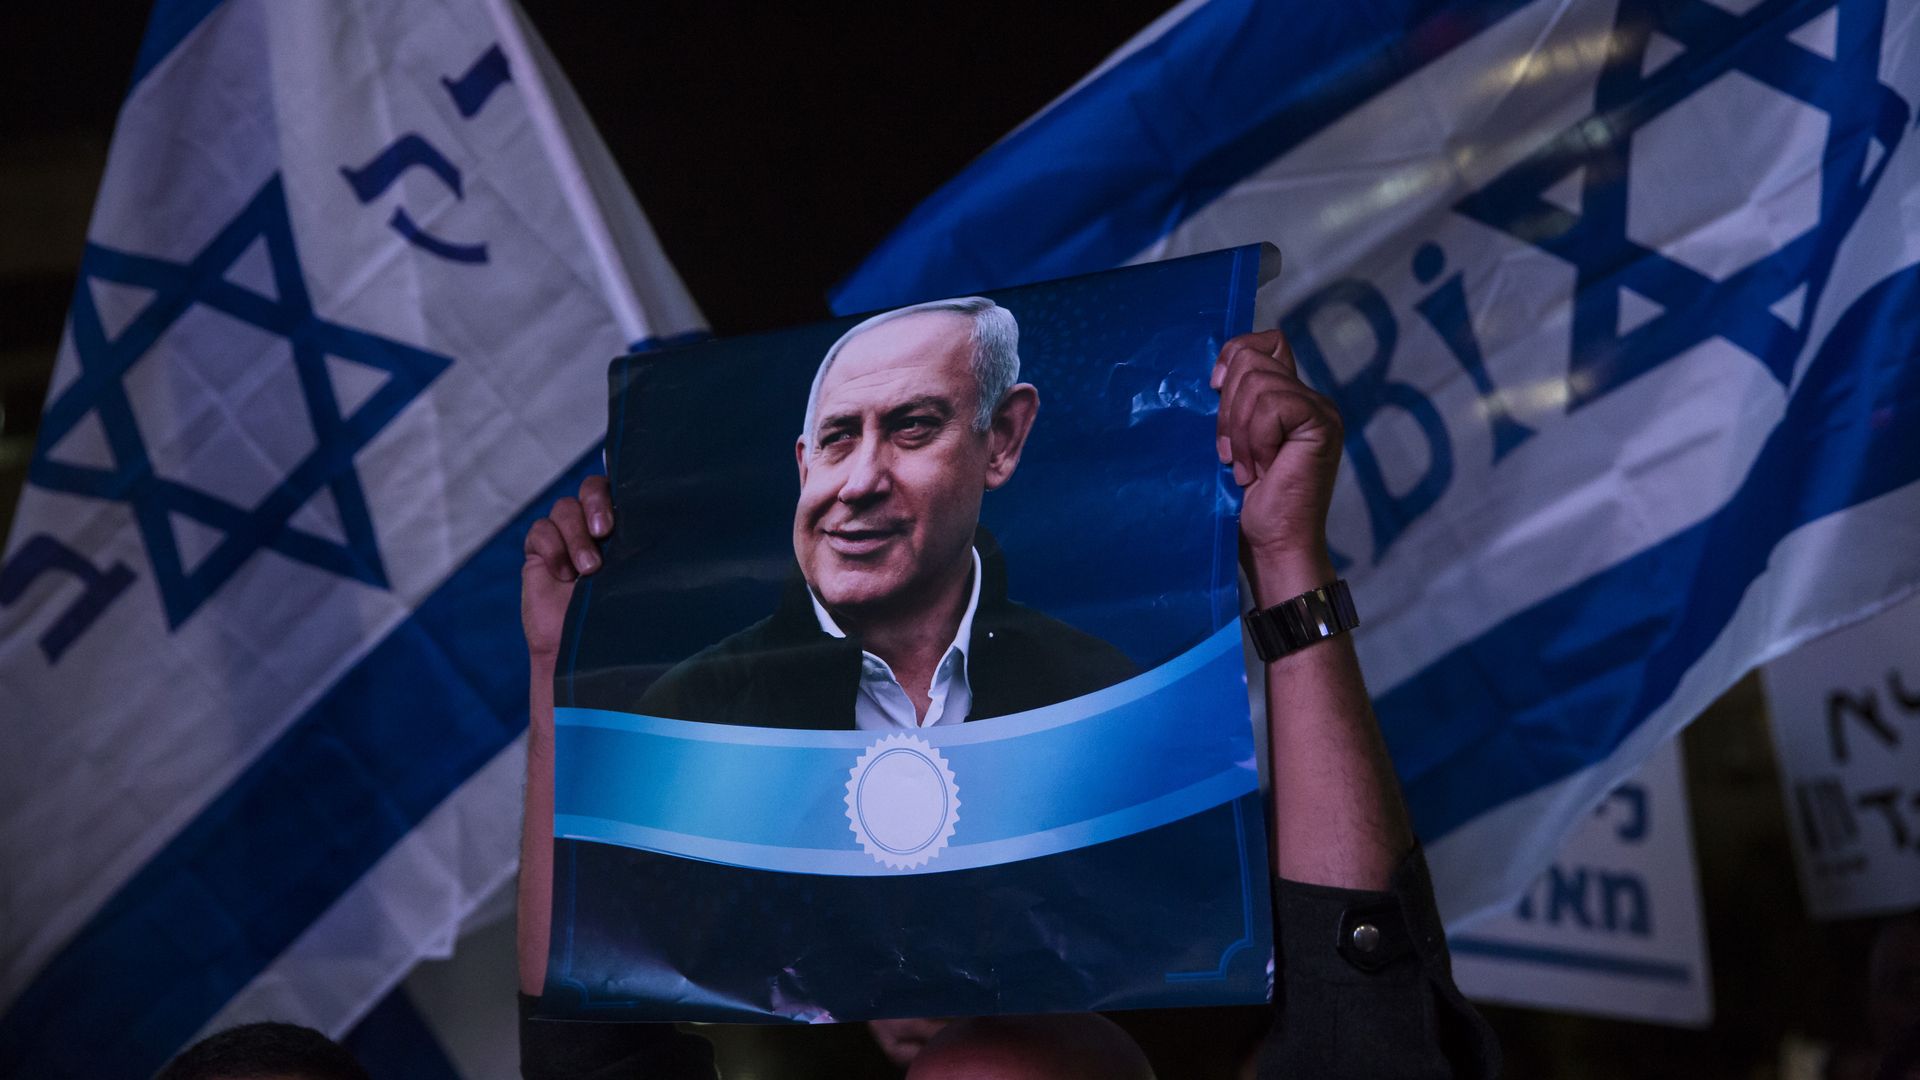 Netanyahu poster at a rally